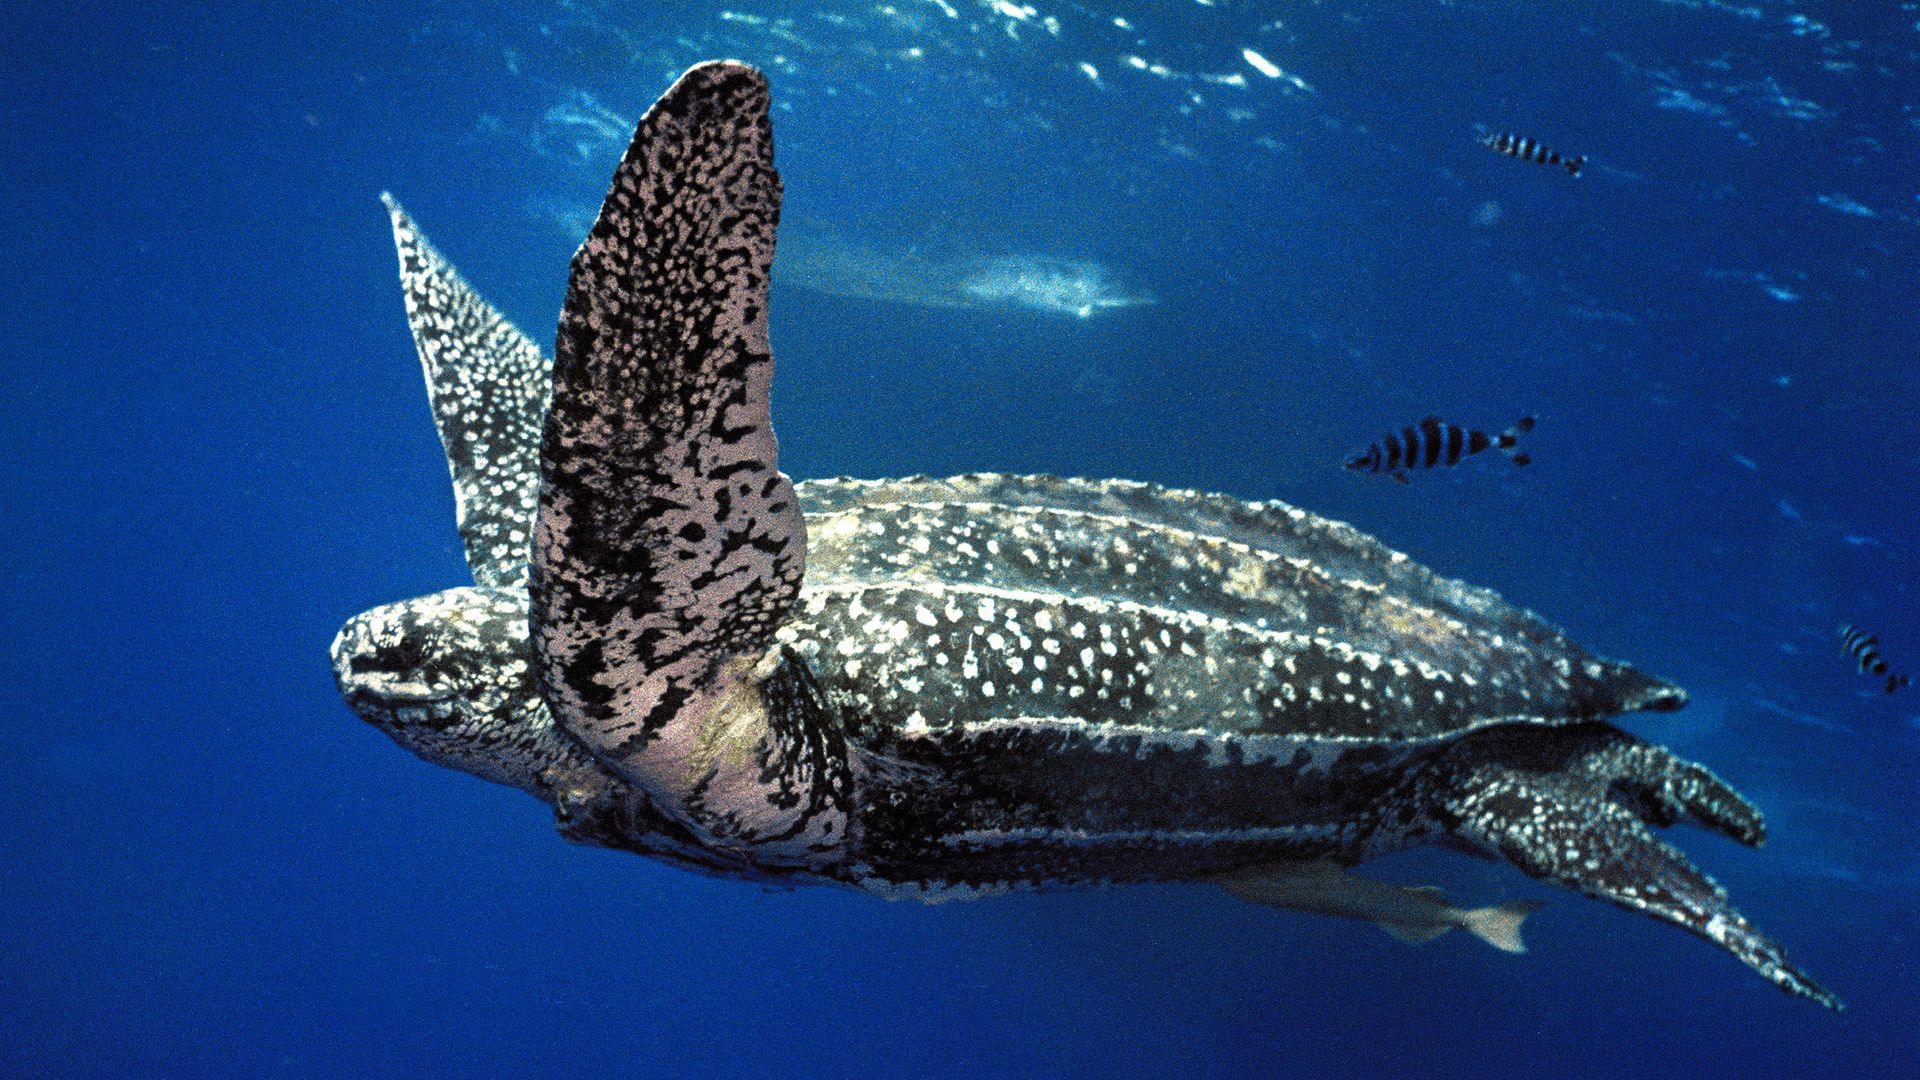 A tartaruga-de-couro (Dermochelys coriacea) também é conhecida como tartaruga-gigante